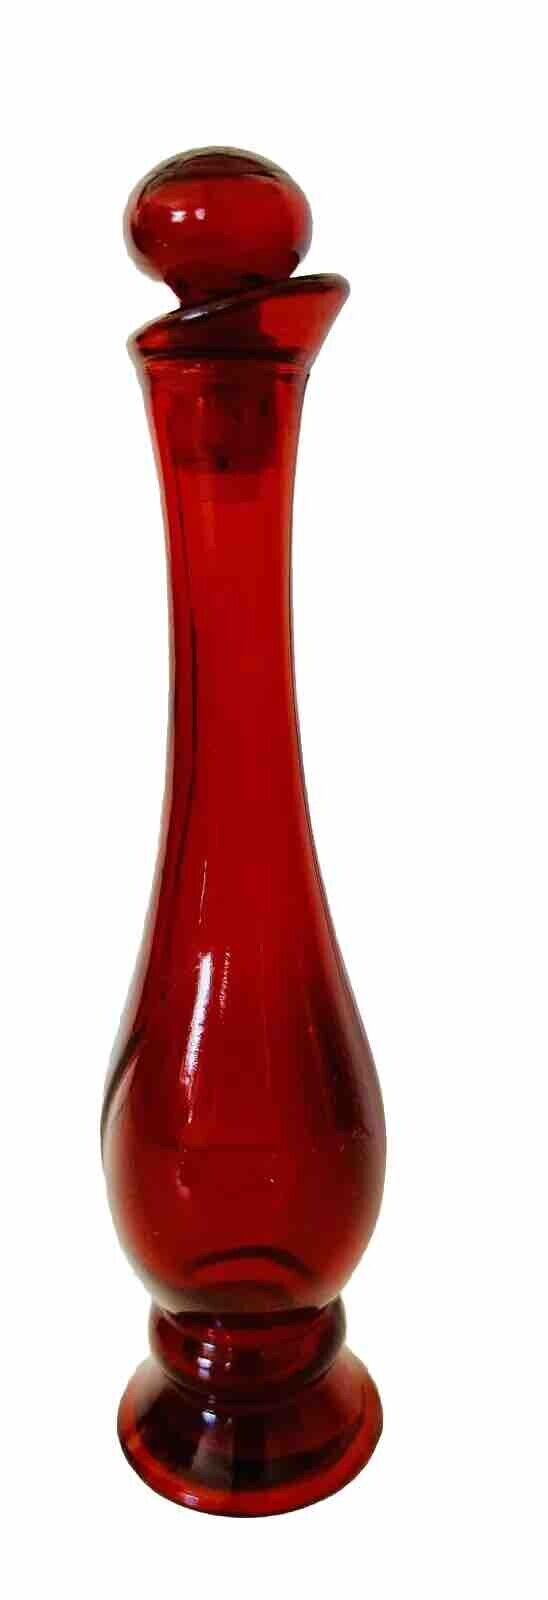 Vintage Ruby Red Decanter Bottle w/ Stopper. Perfume Bottle